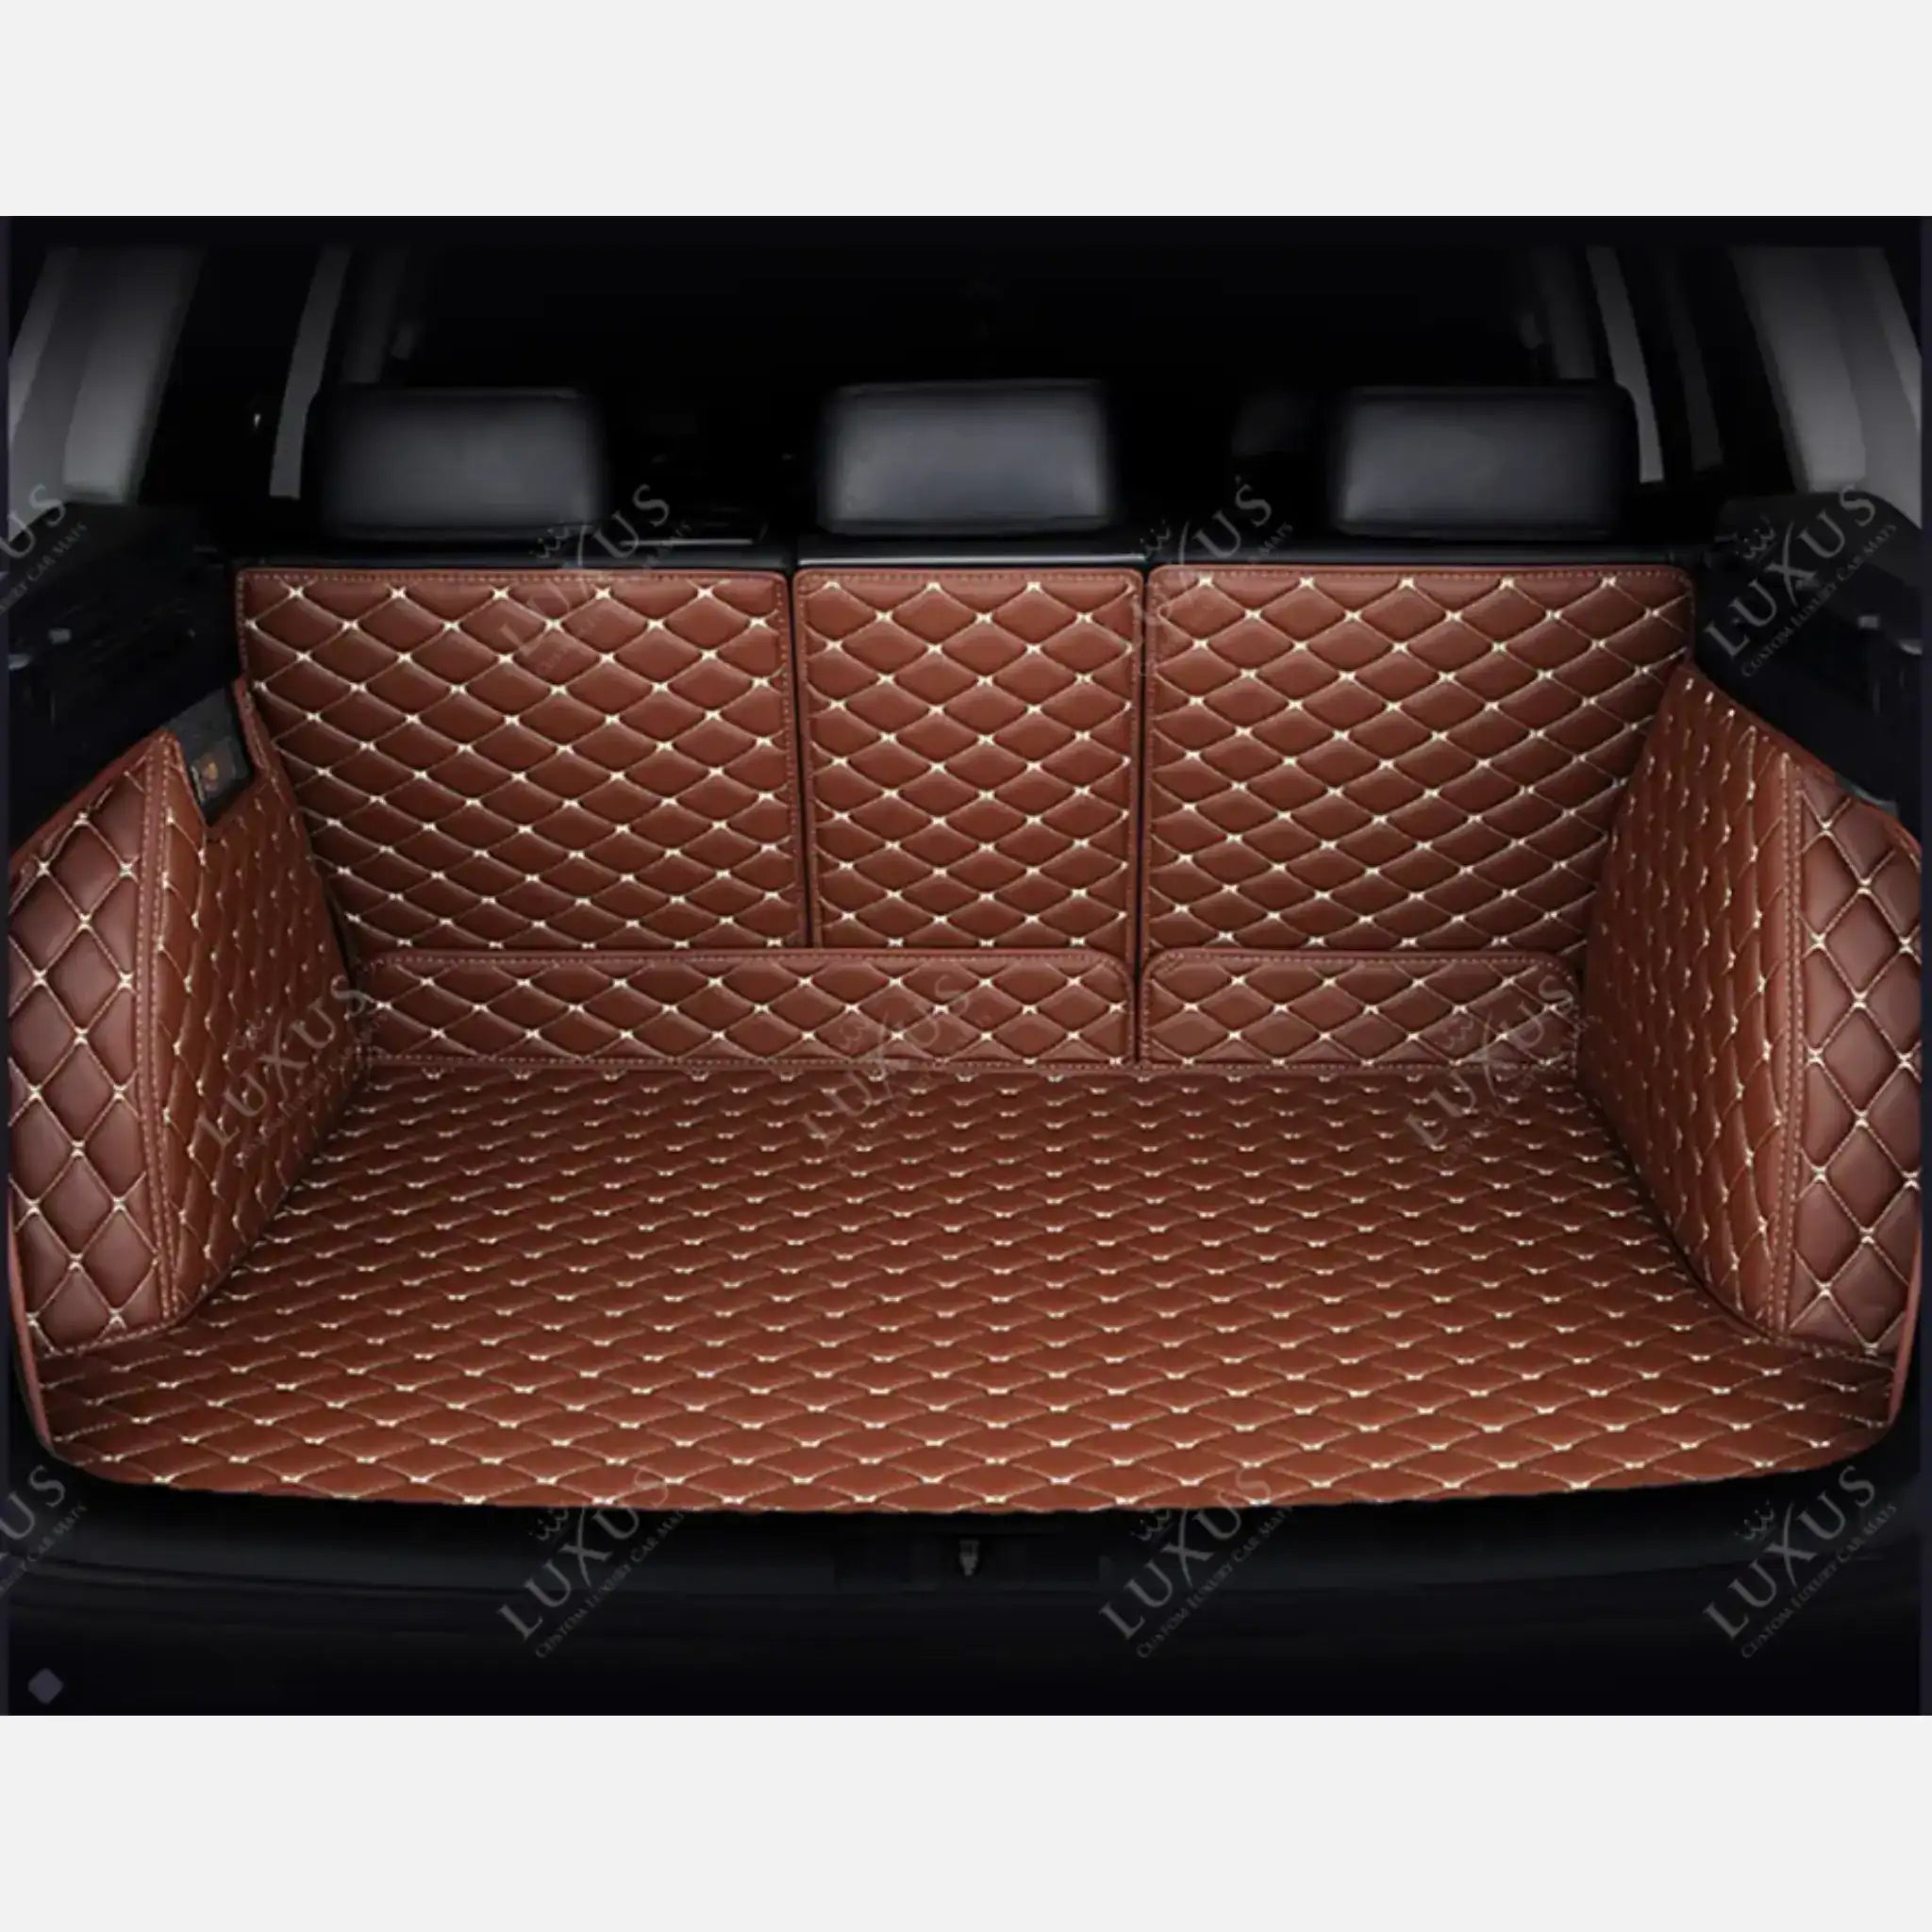 Universal car floor mat For Mitsubishi mirage Space Star car mats